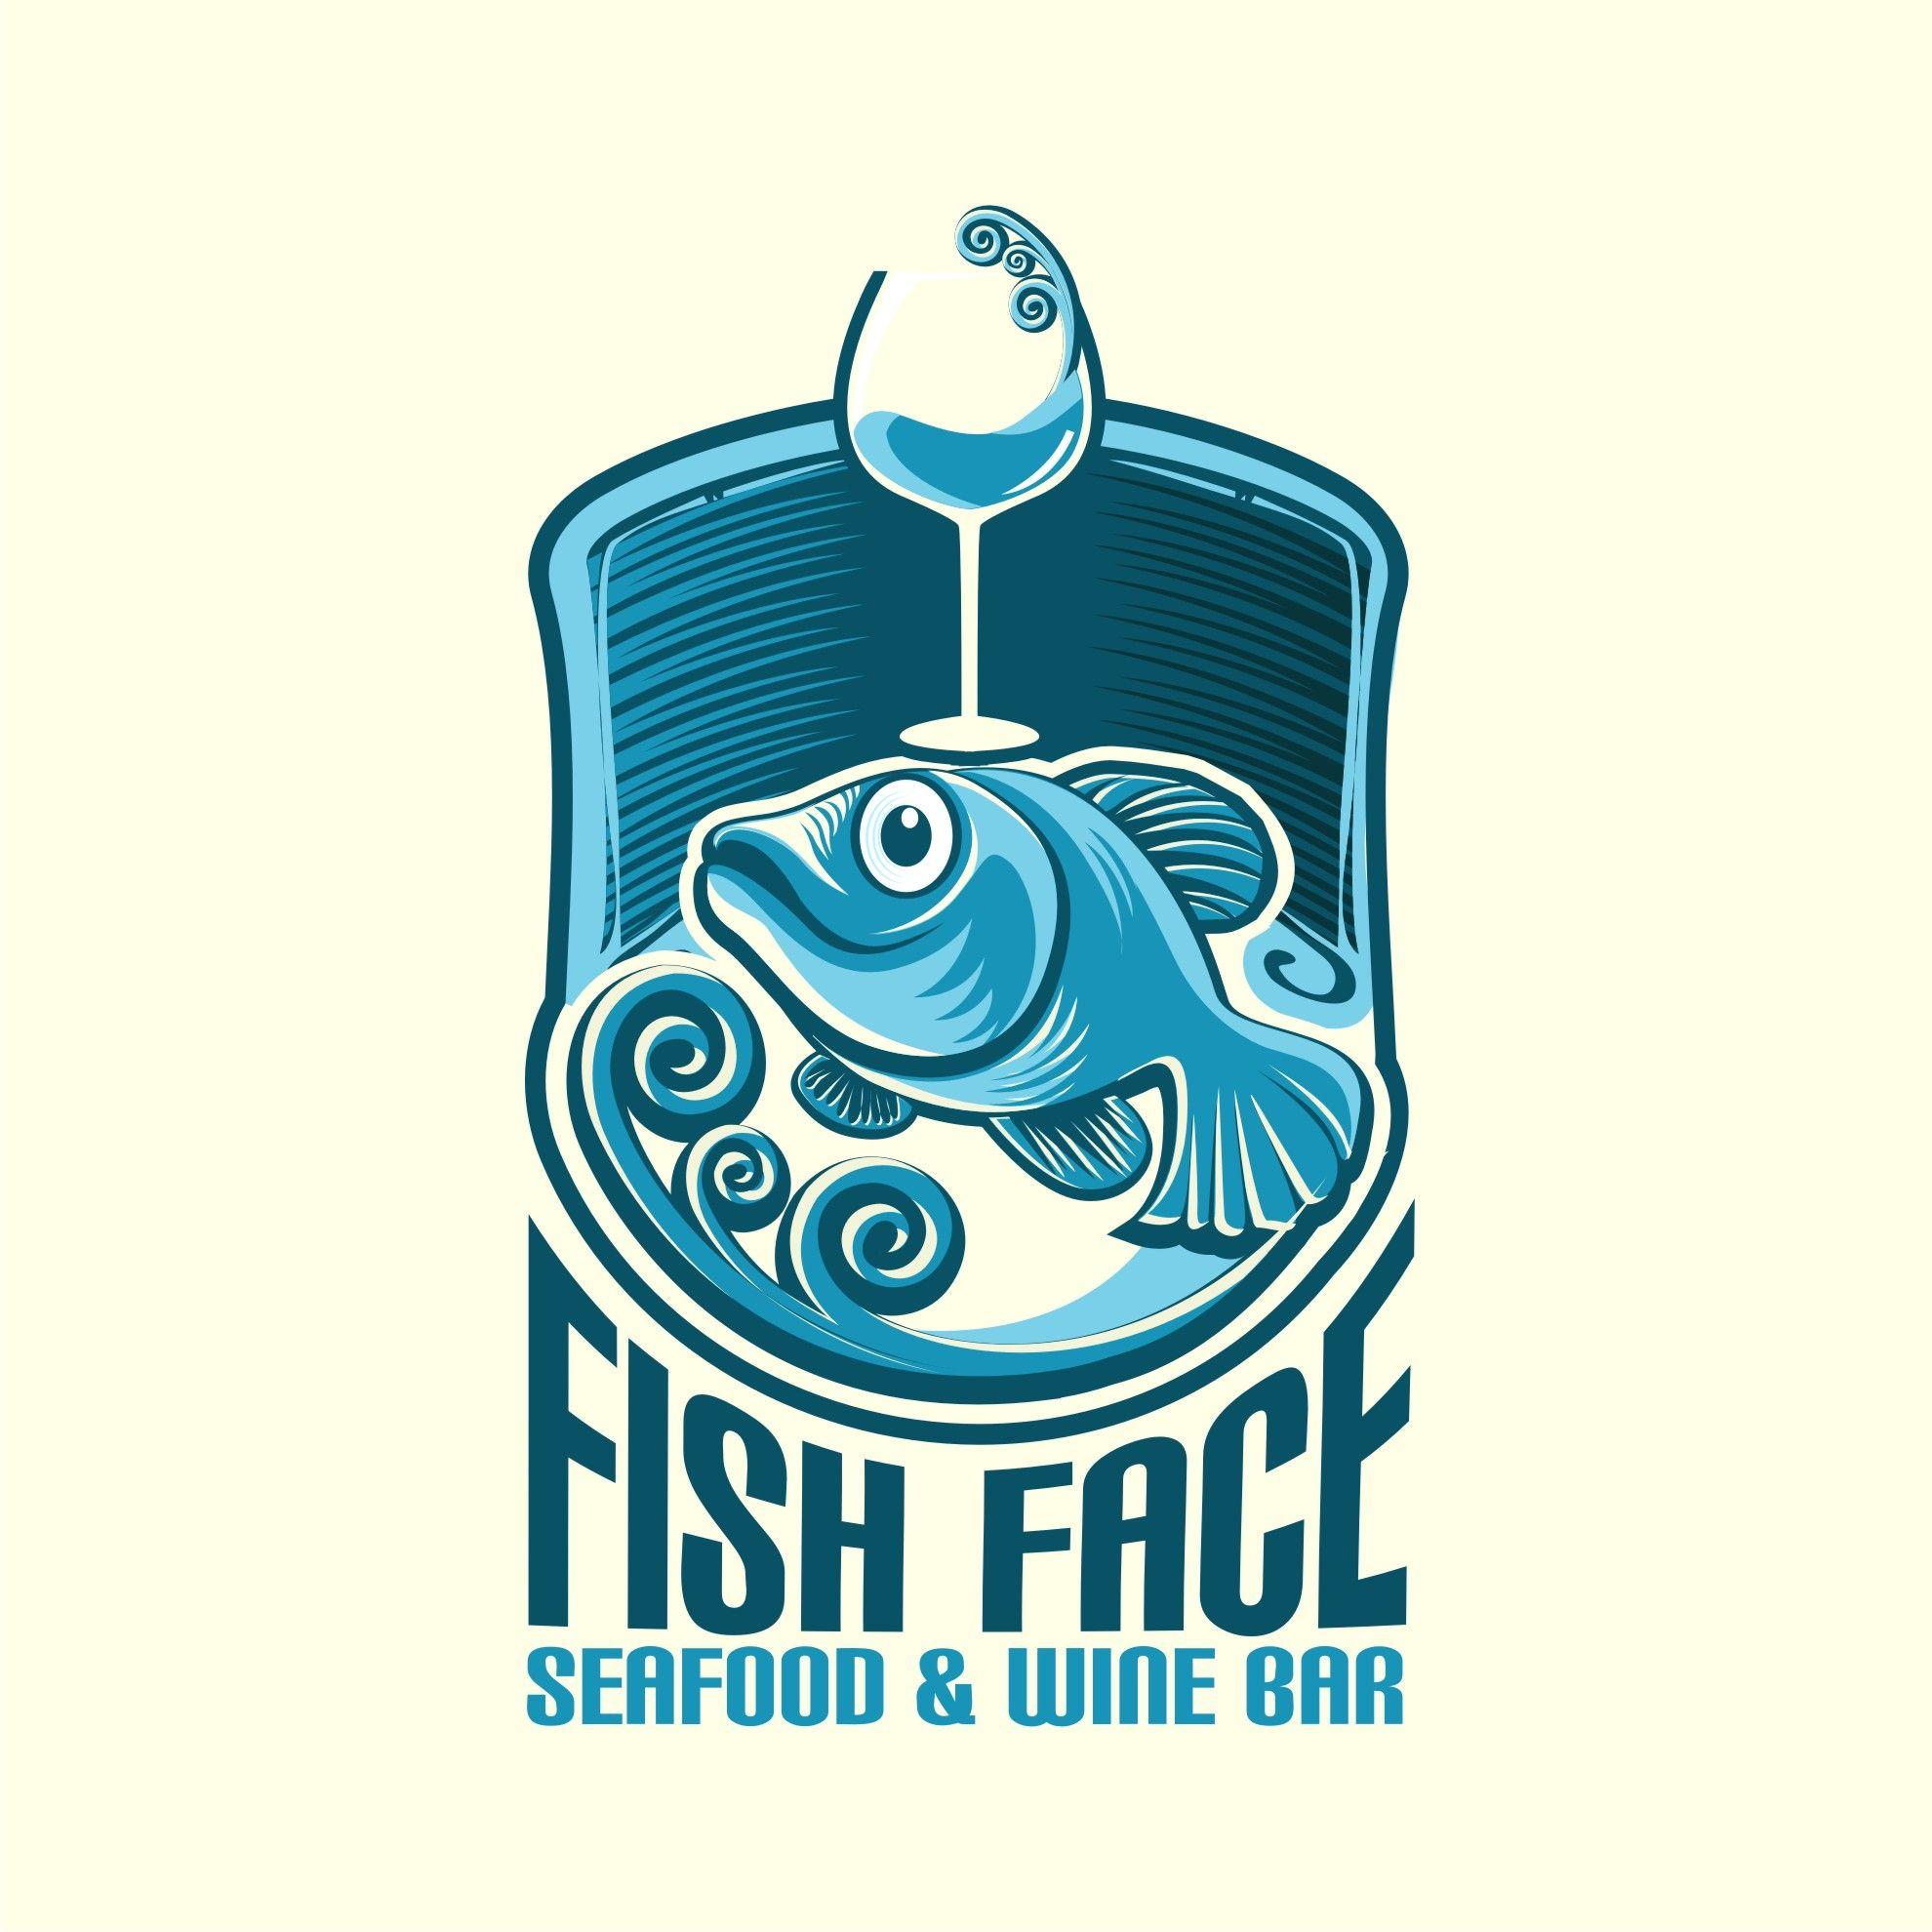 Fish Restaurant Logo - Modern, Elegant, Seafood Restaurant Logo Design for Fish Face